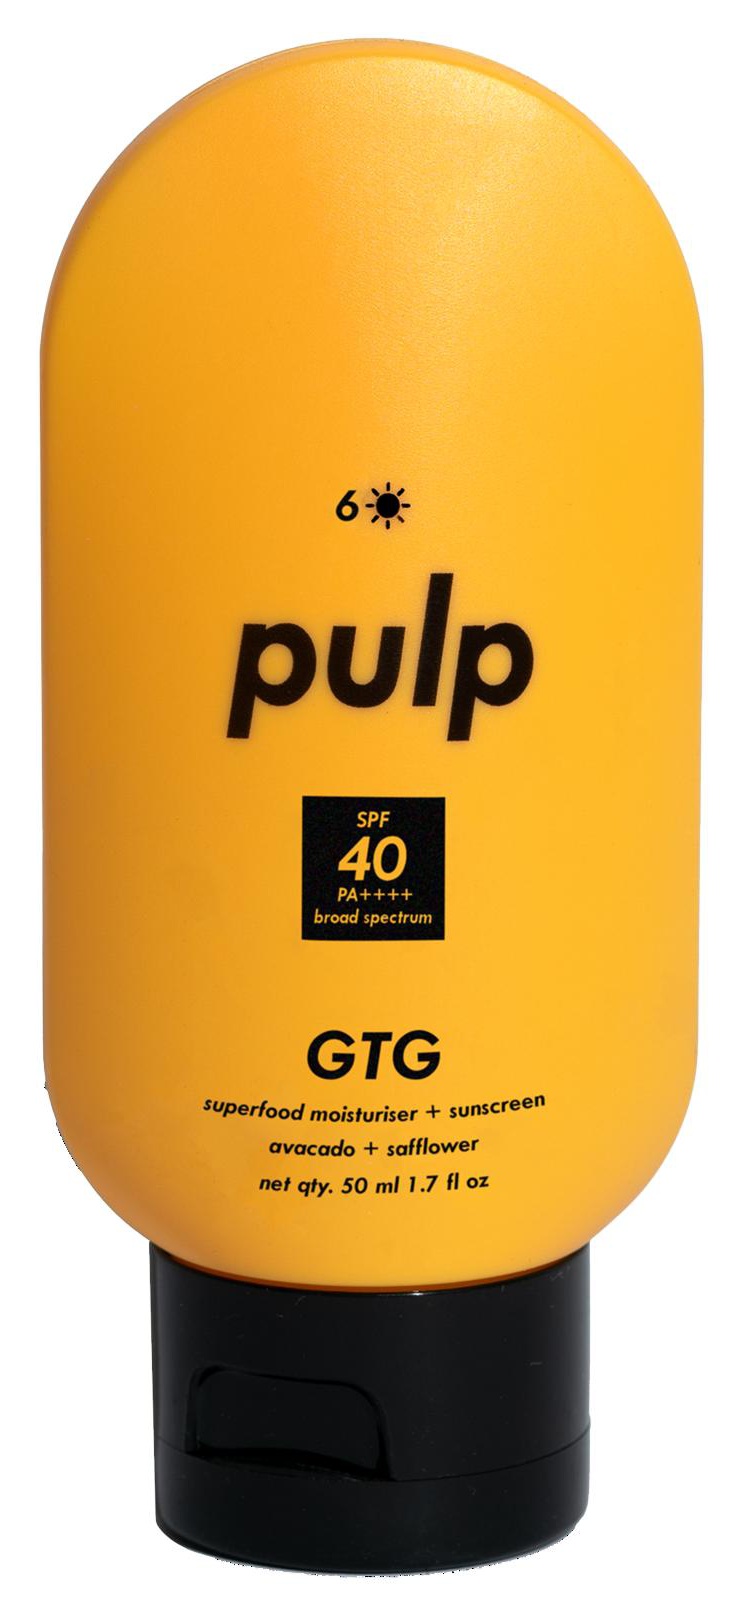 Pulp GTG Superfood Daily Moisturiser 40 SPF